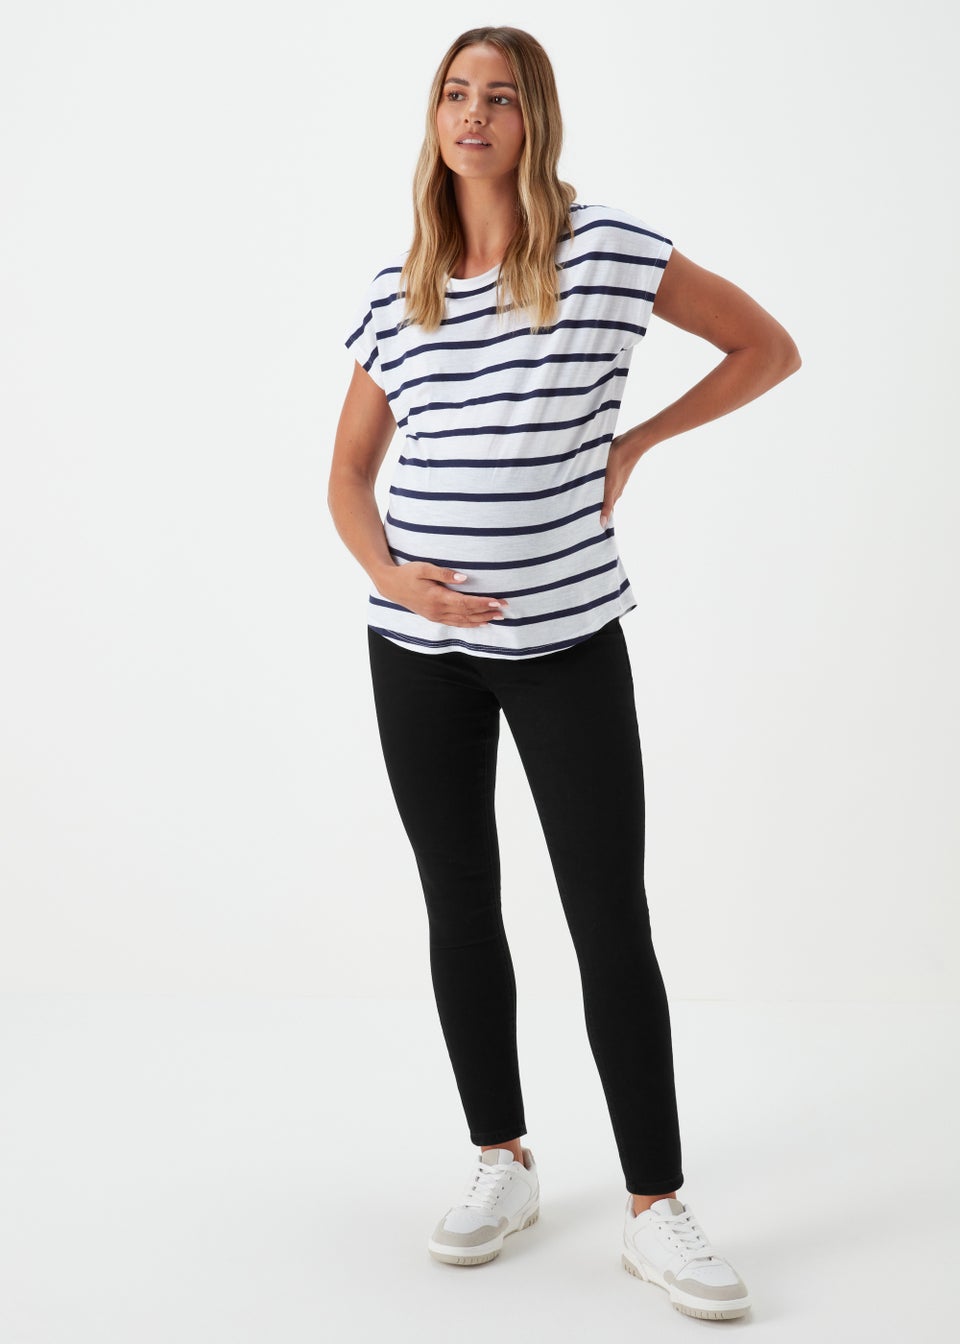 Maternity April Black Over The Bump Skinny Jeans